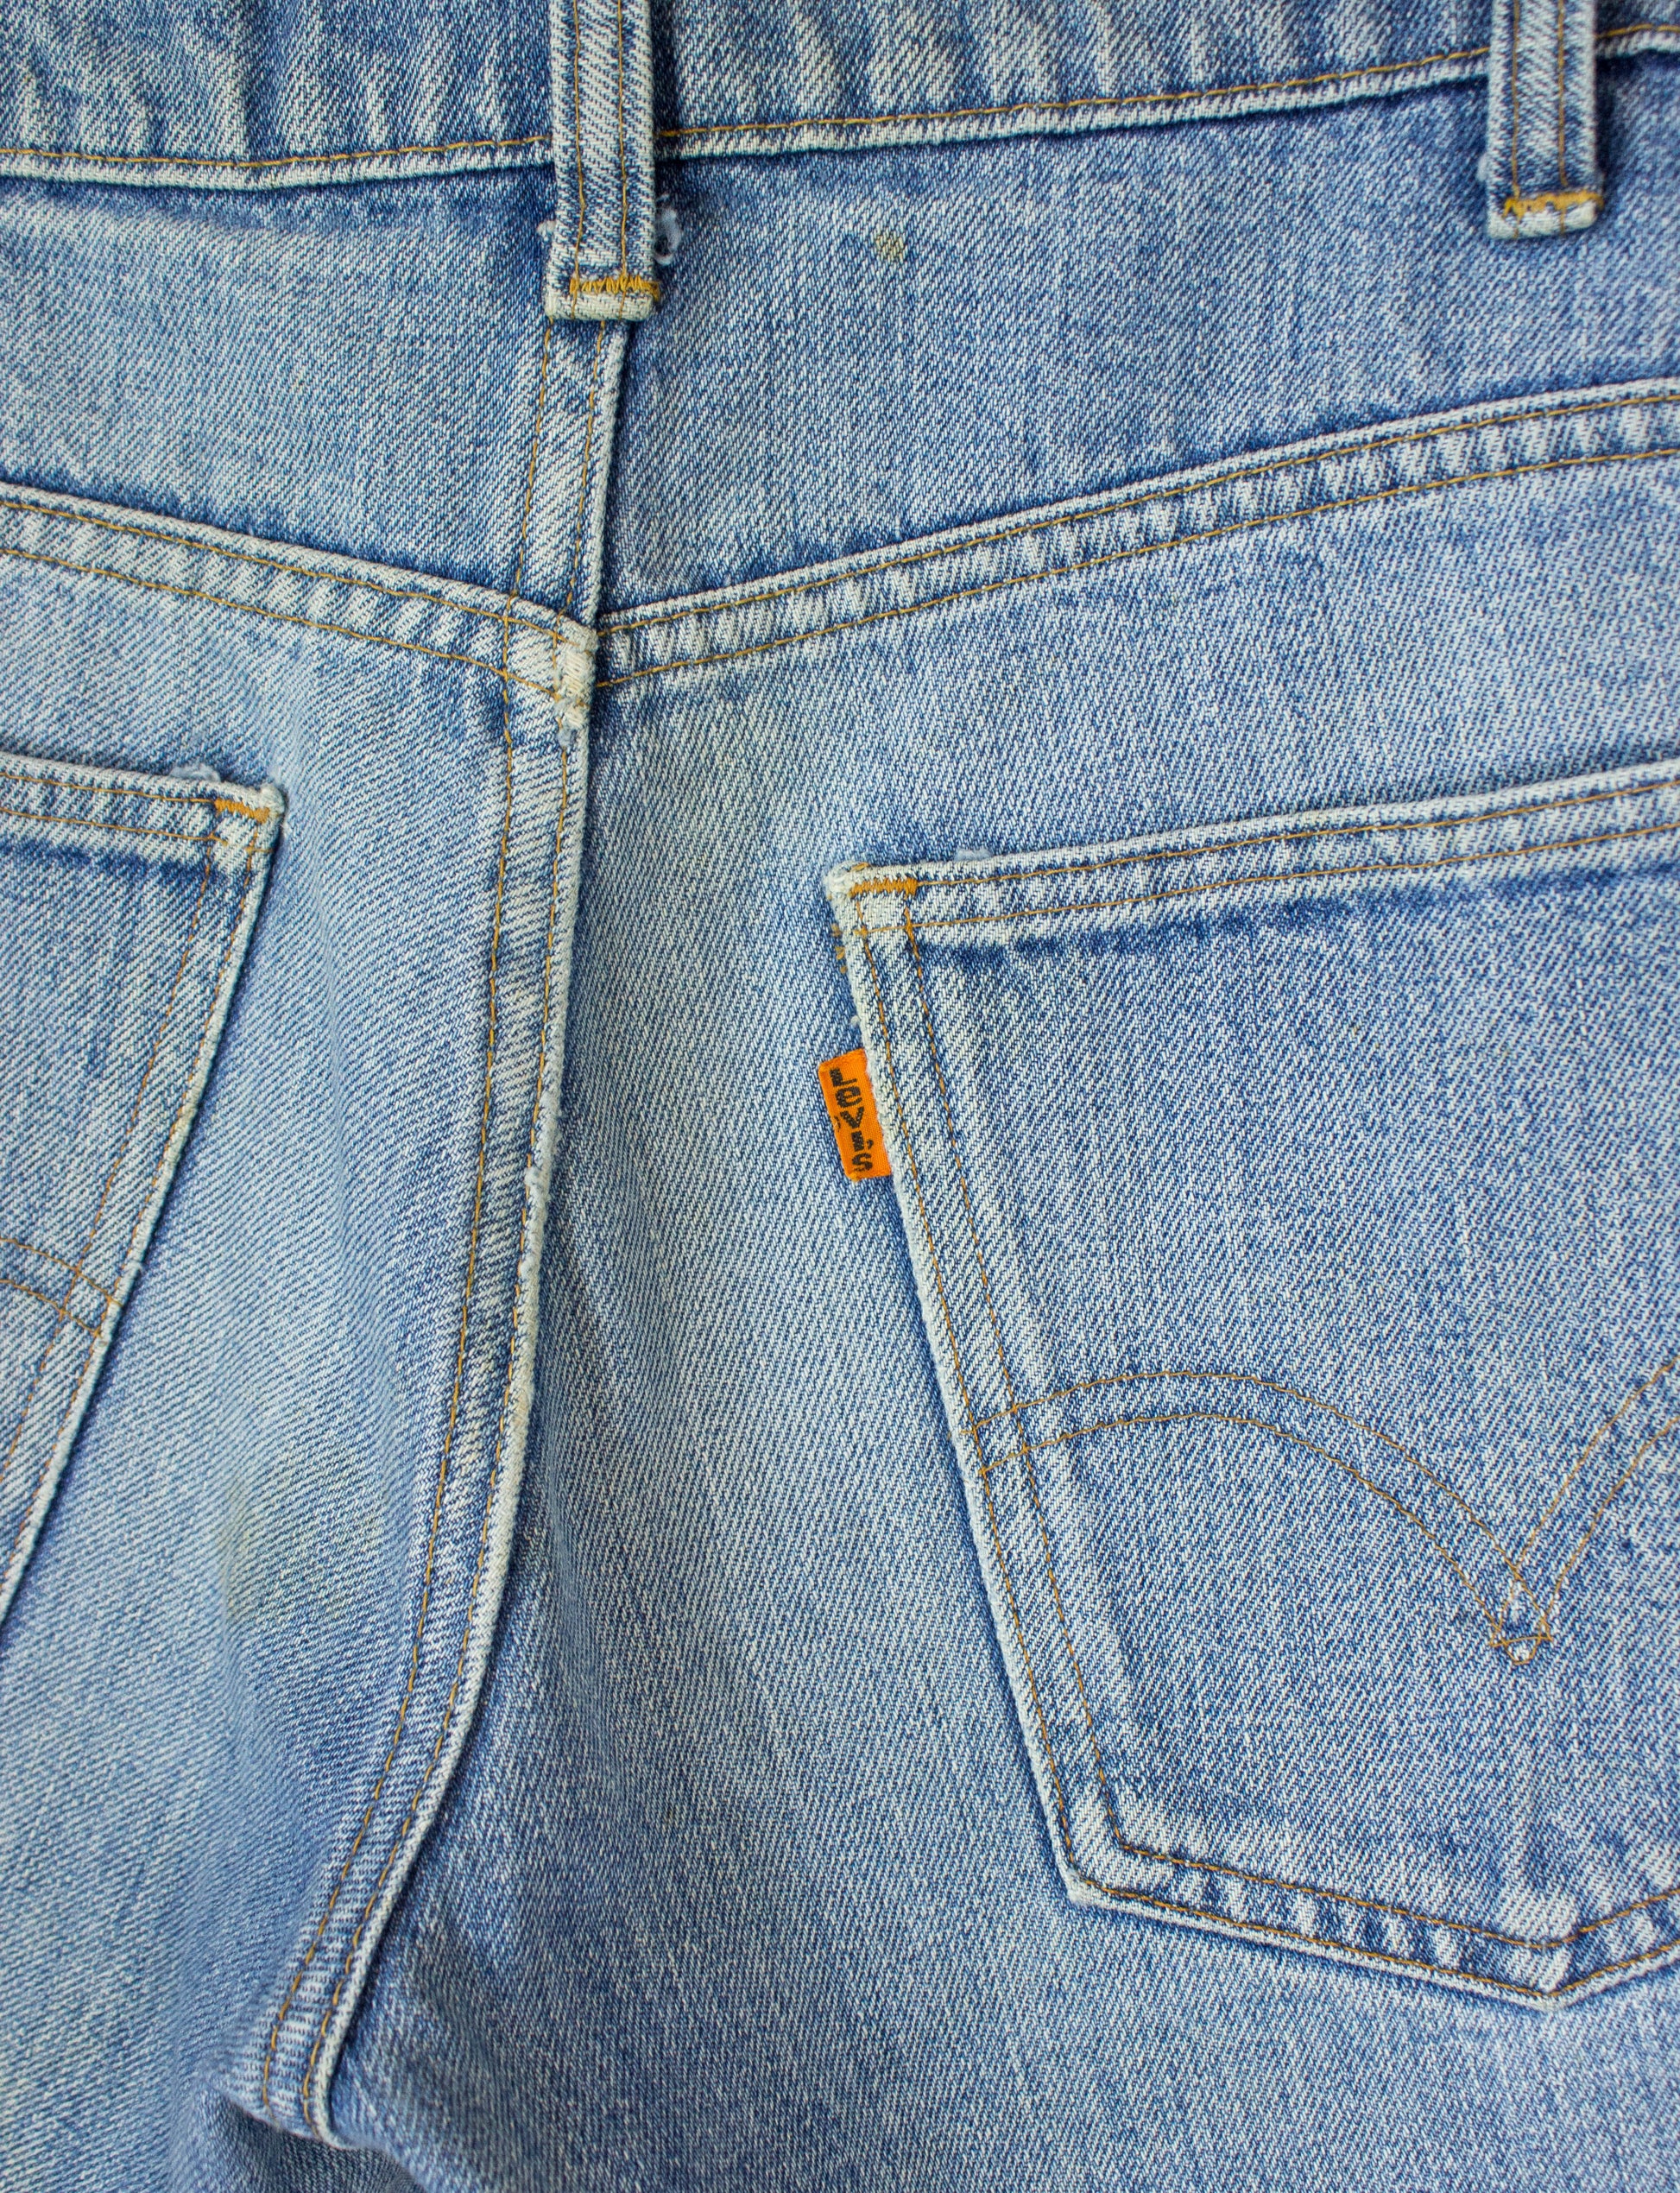 Vintage Levi's Cut Off Denim Shorts 70s Orange Tab Thrashed Light Wash 30 Waist